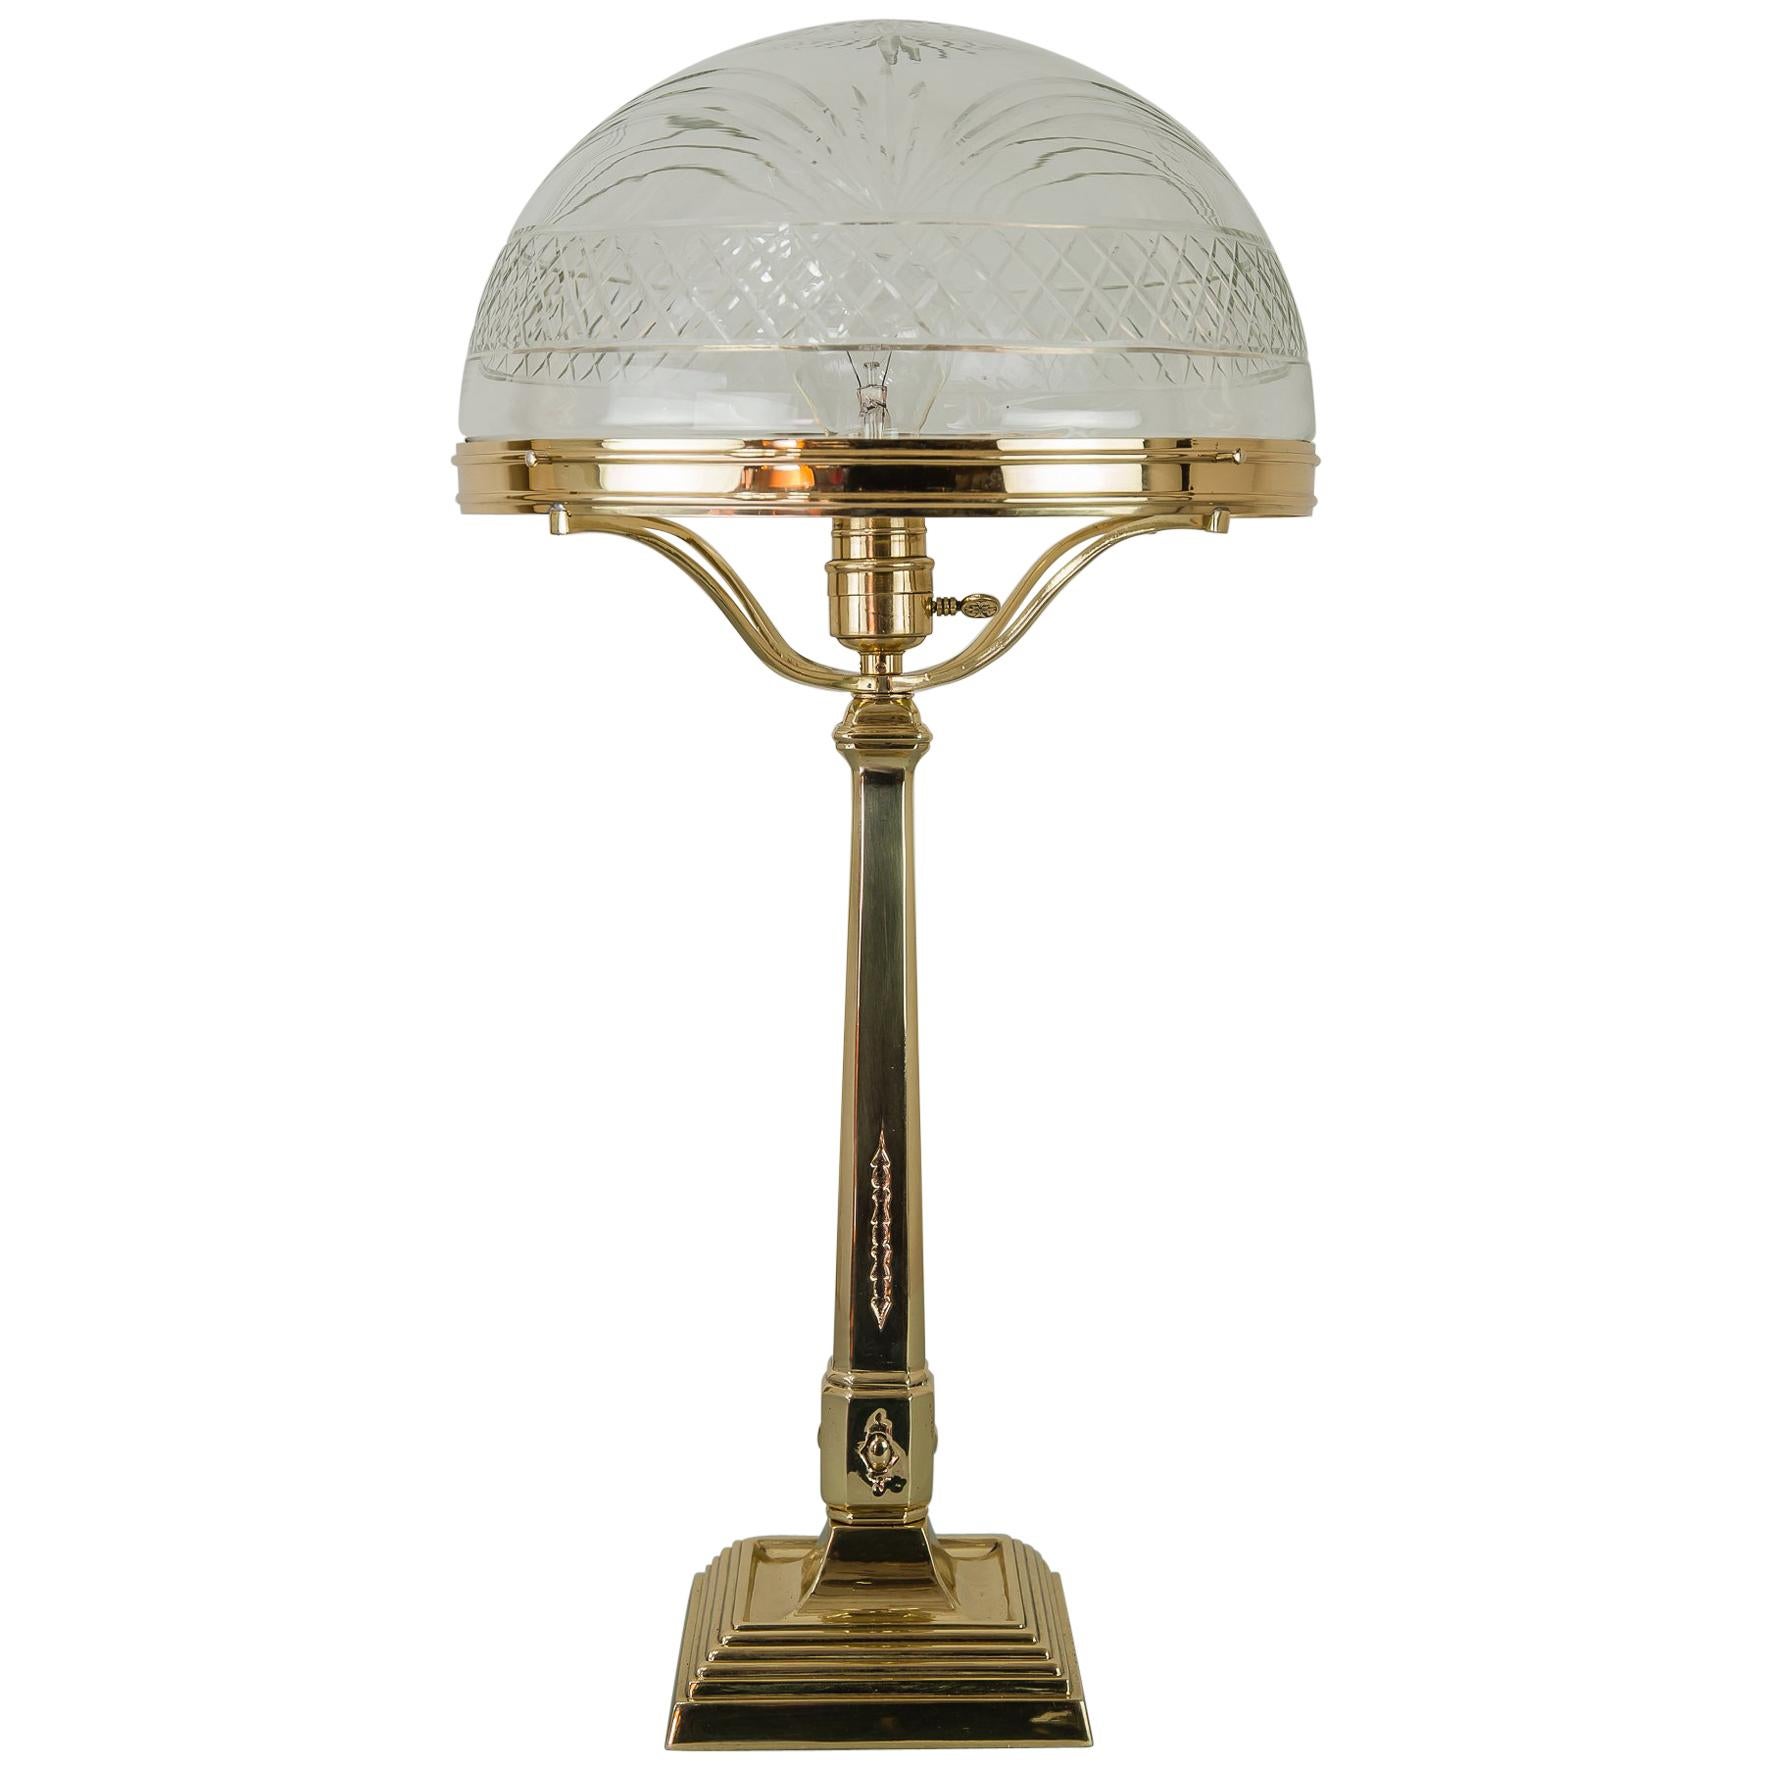 Jugendstil Table Lamp Vienna with Original Cut Glass Shade, 1909